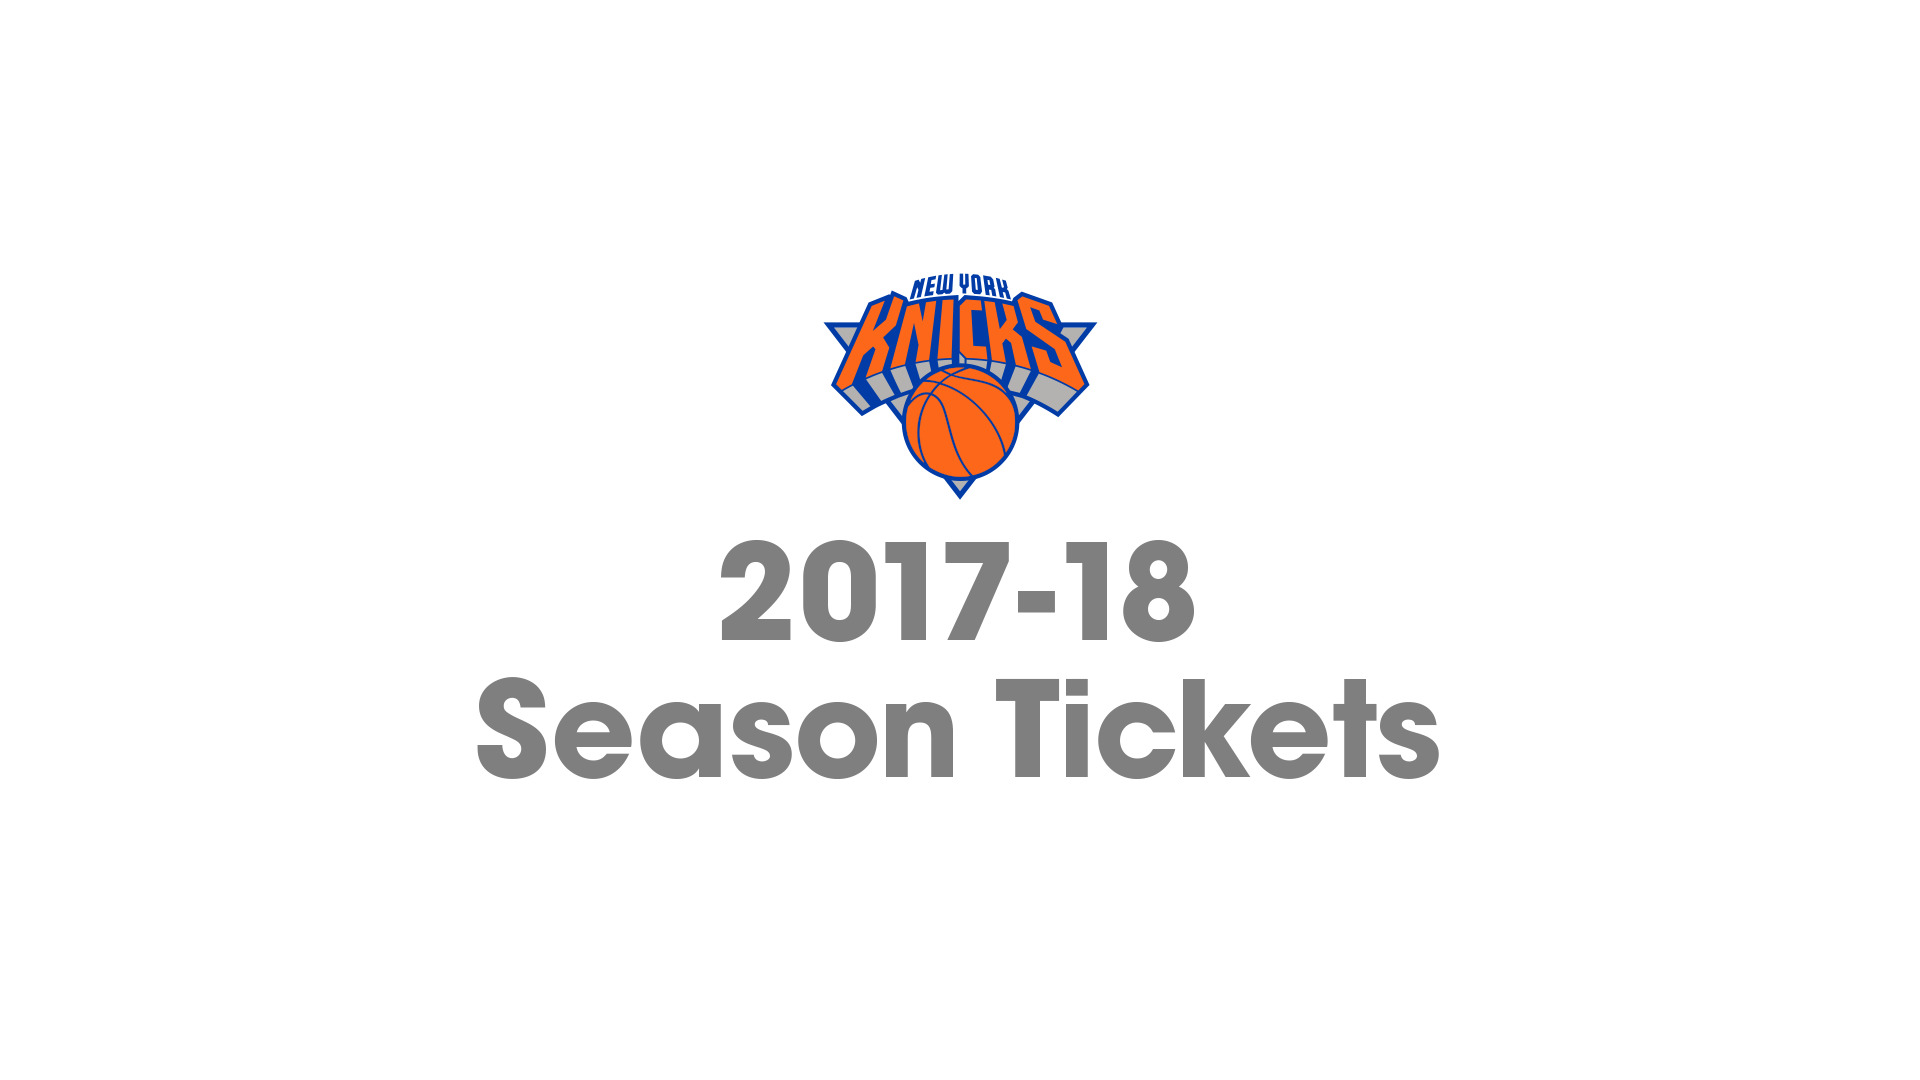 New York Knicks 2017-18 Season Tickets